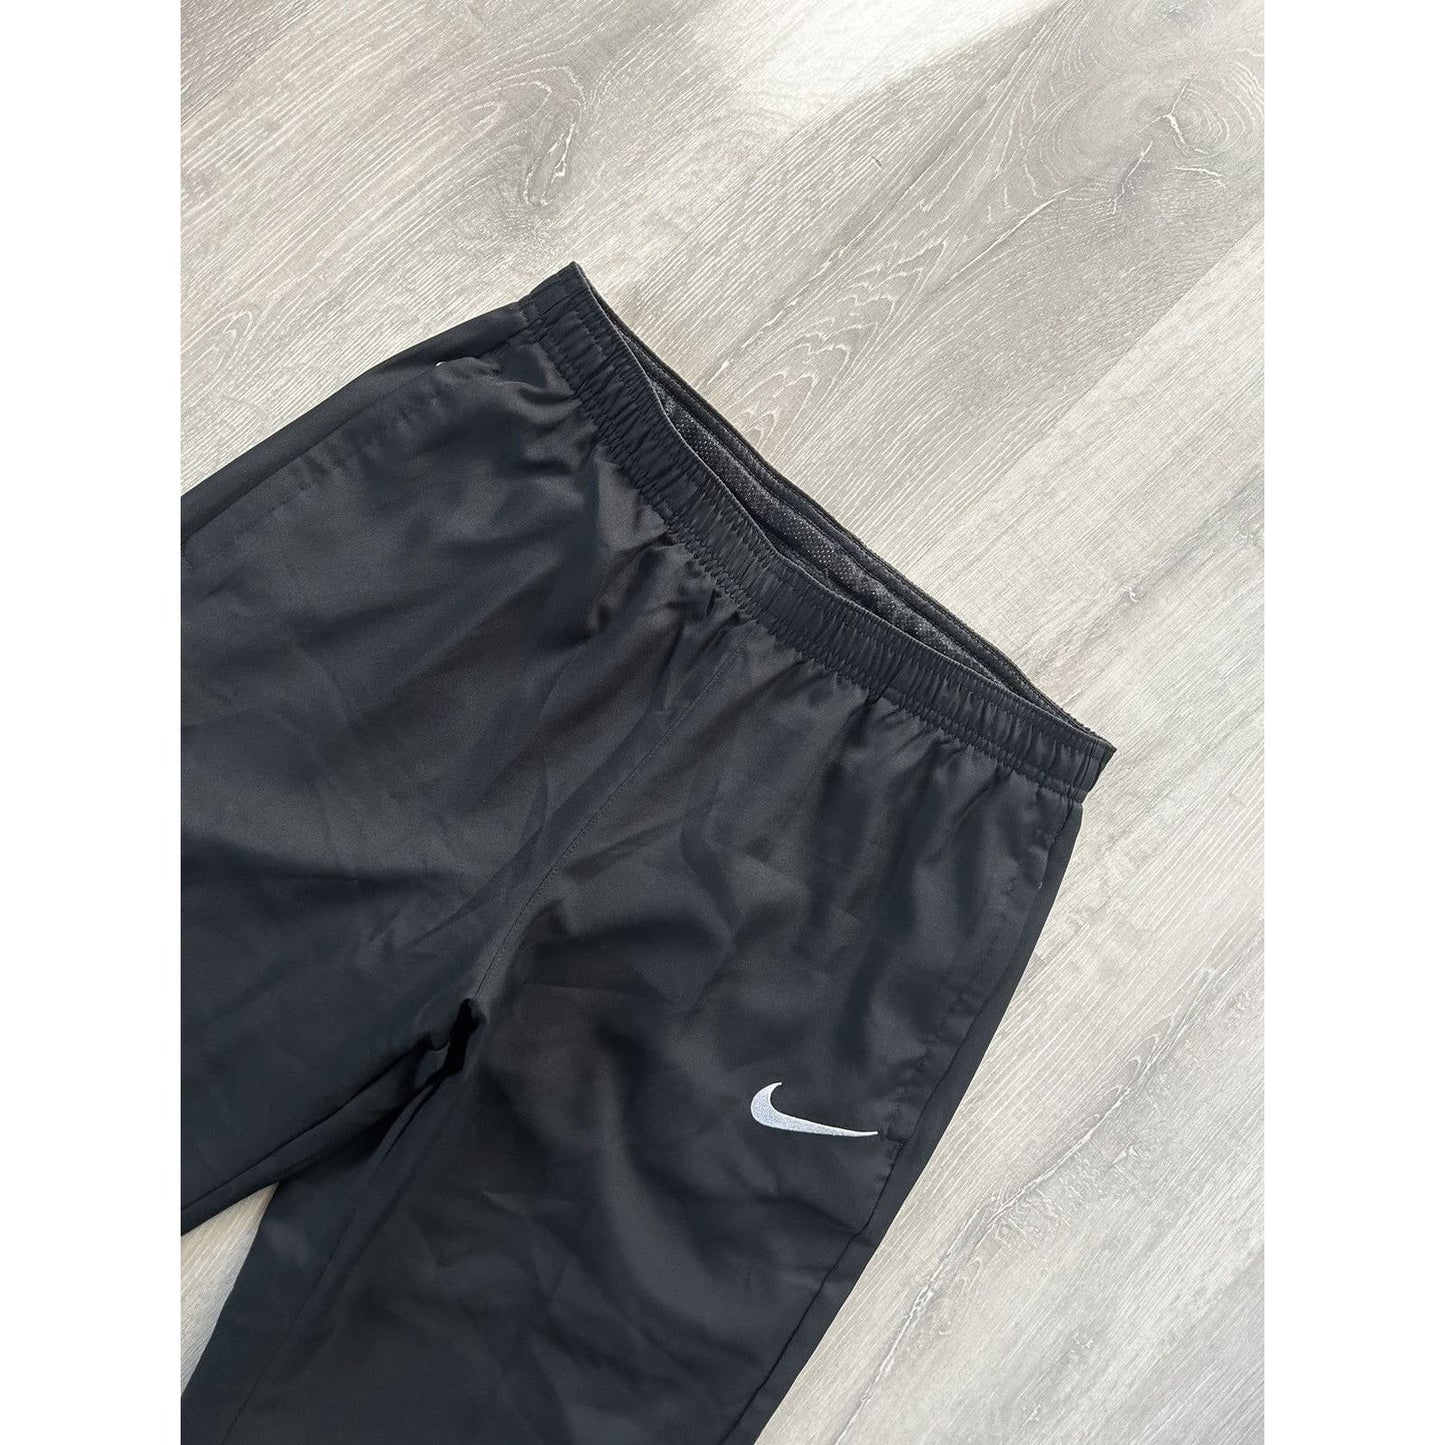 Juventus Nike track suit vintage black white nylon set Y2K